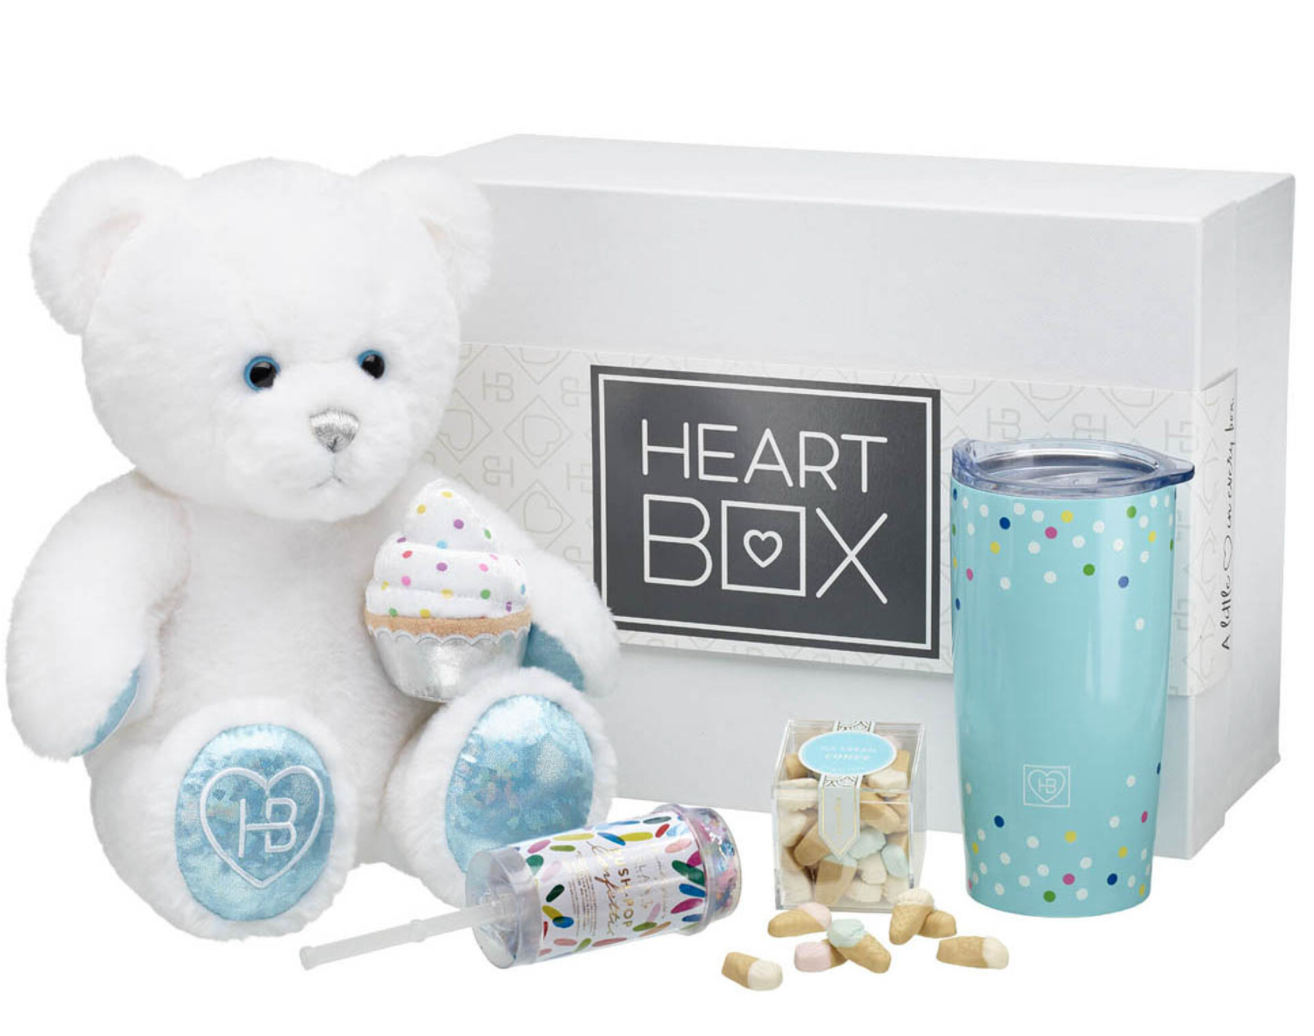 Hooray, It's Your Birthday! Teddy Bear with 20 oz. Confetti Tumbler Gift Set